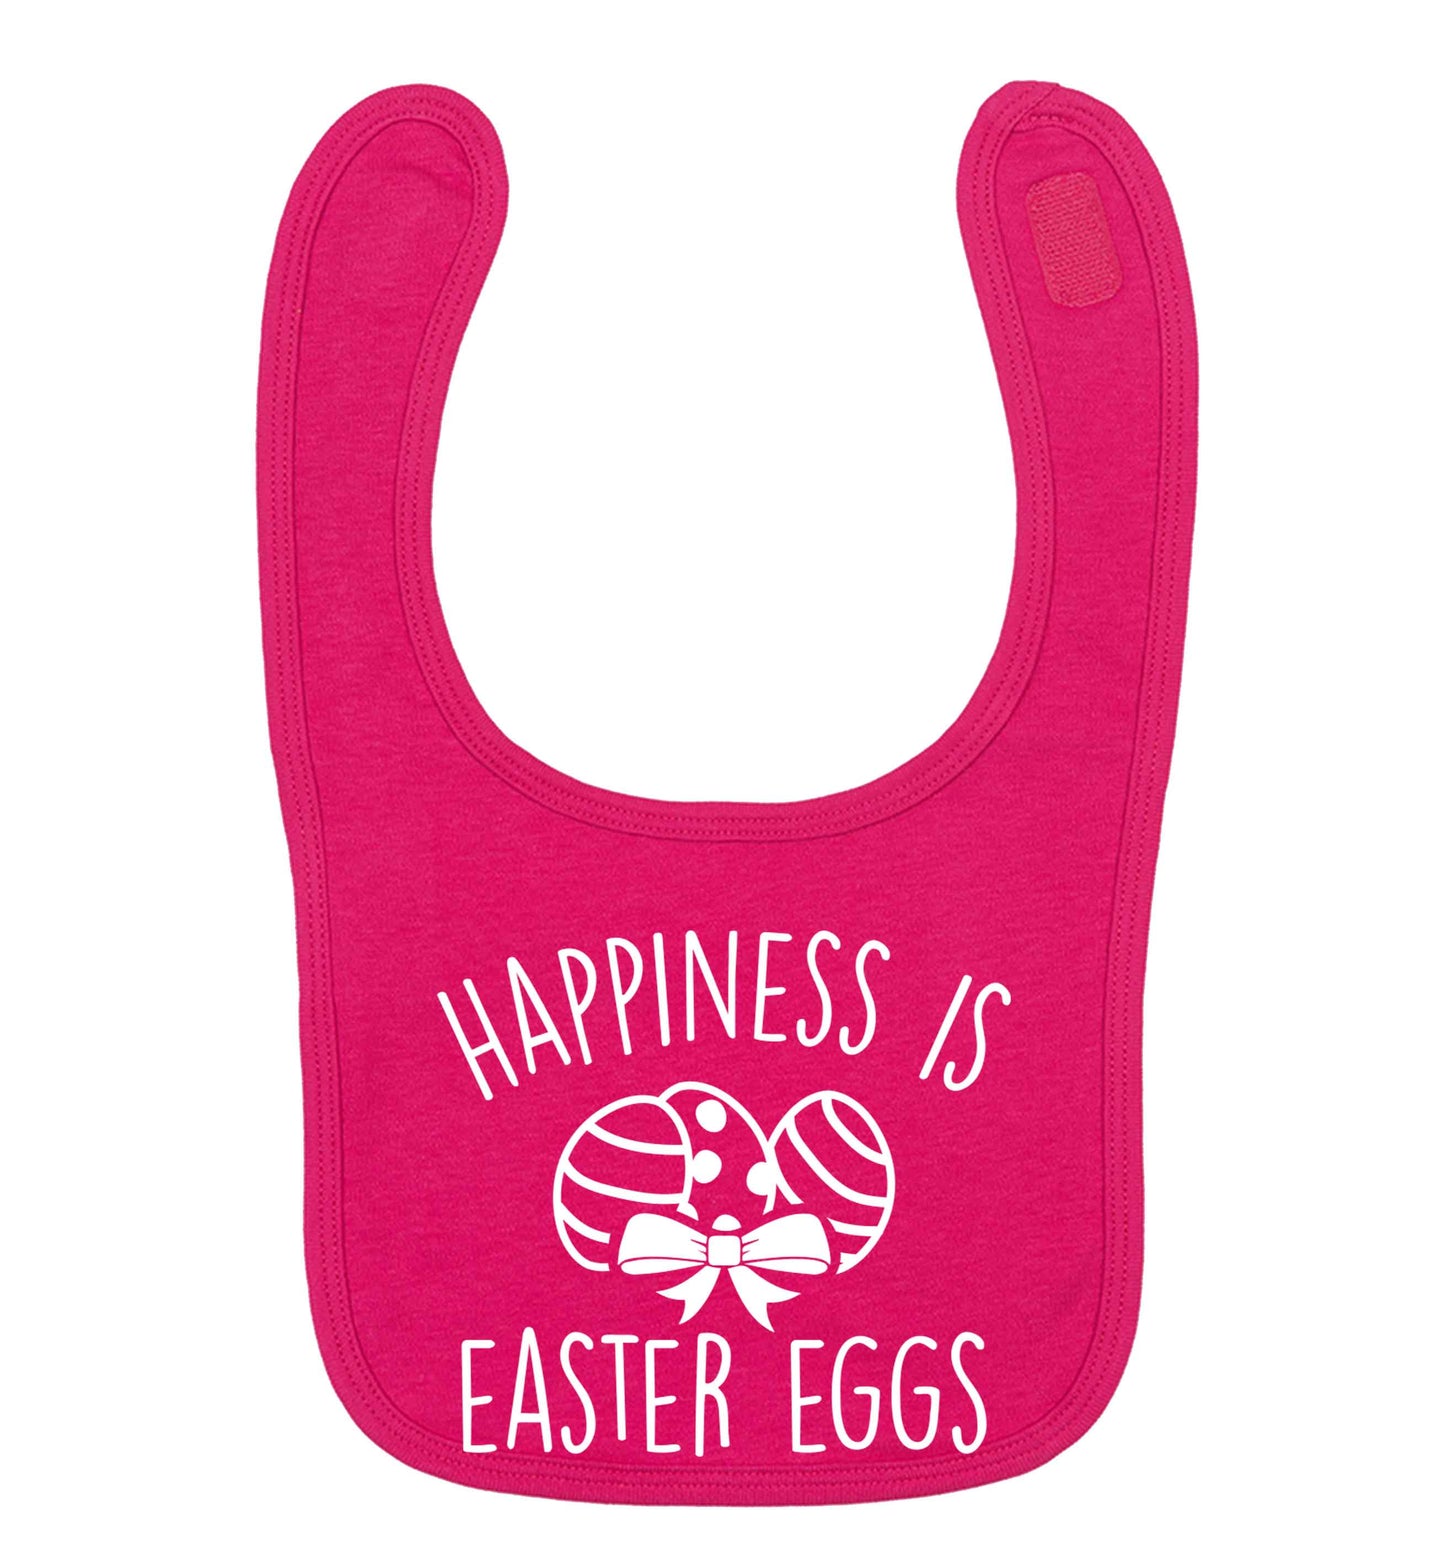 Happiness is Easter eggs dark pink baby bib